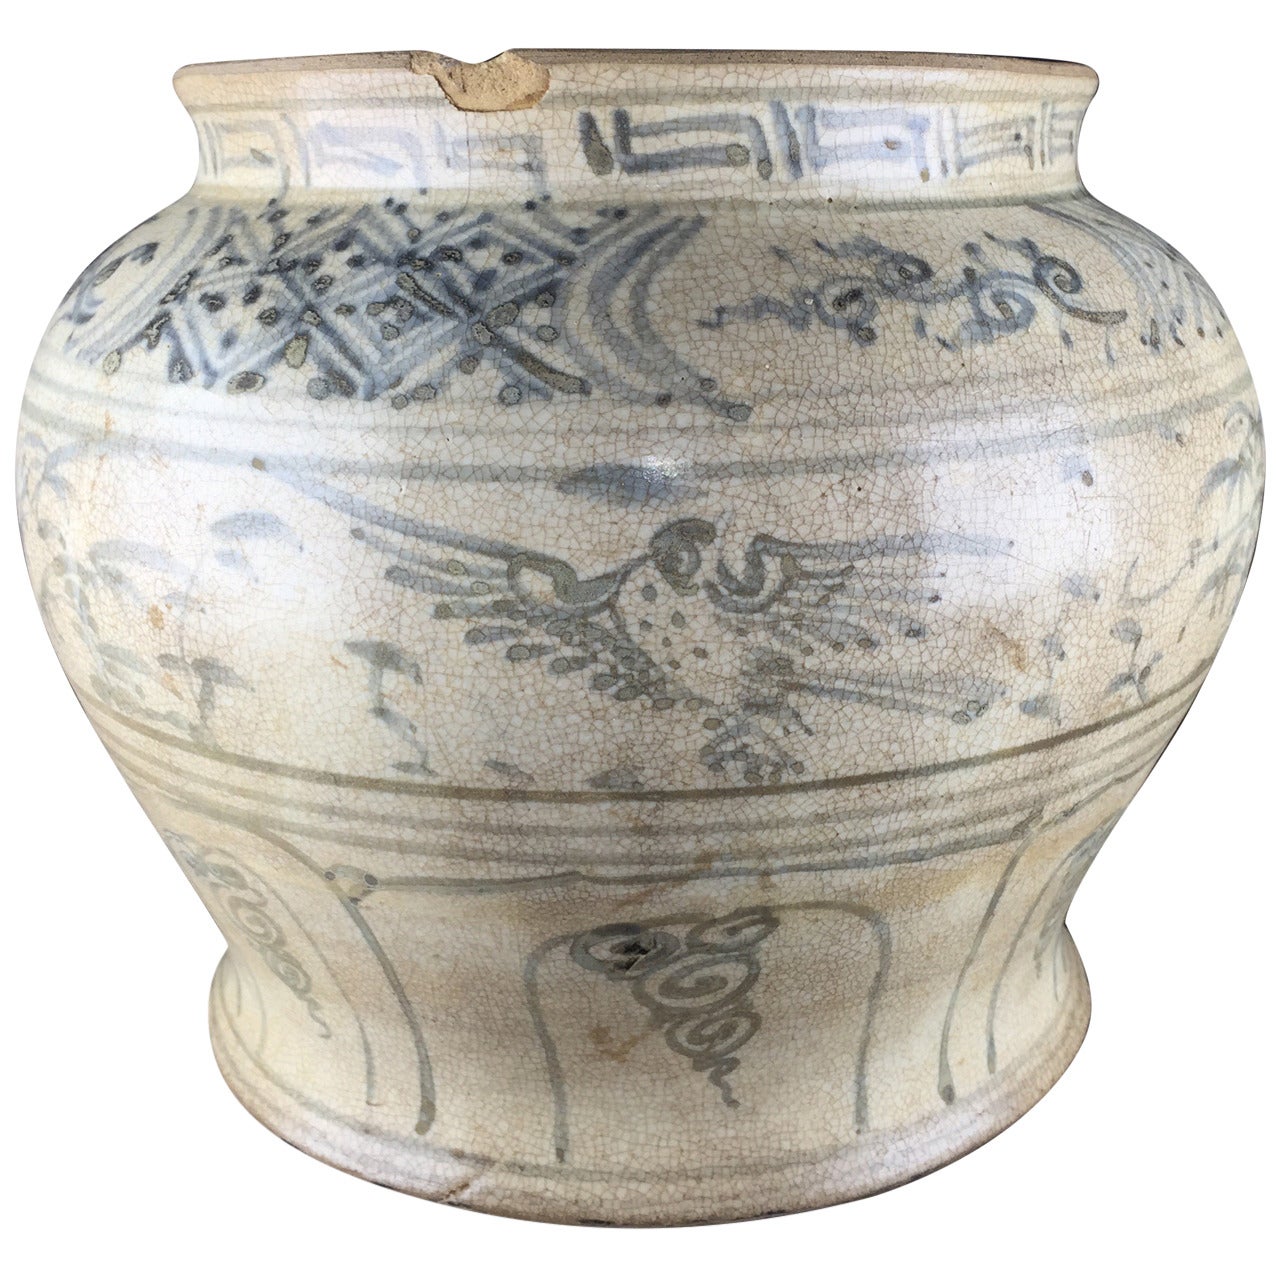 Annamese Vietnamese Baluster Jar with Birds, 15th Century